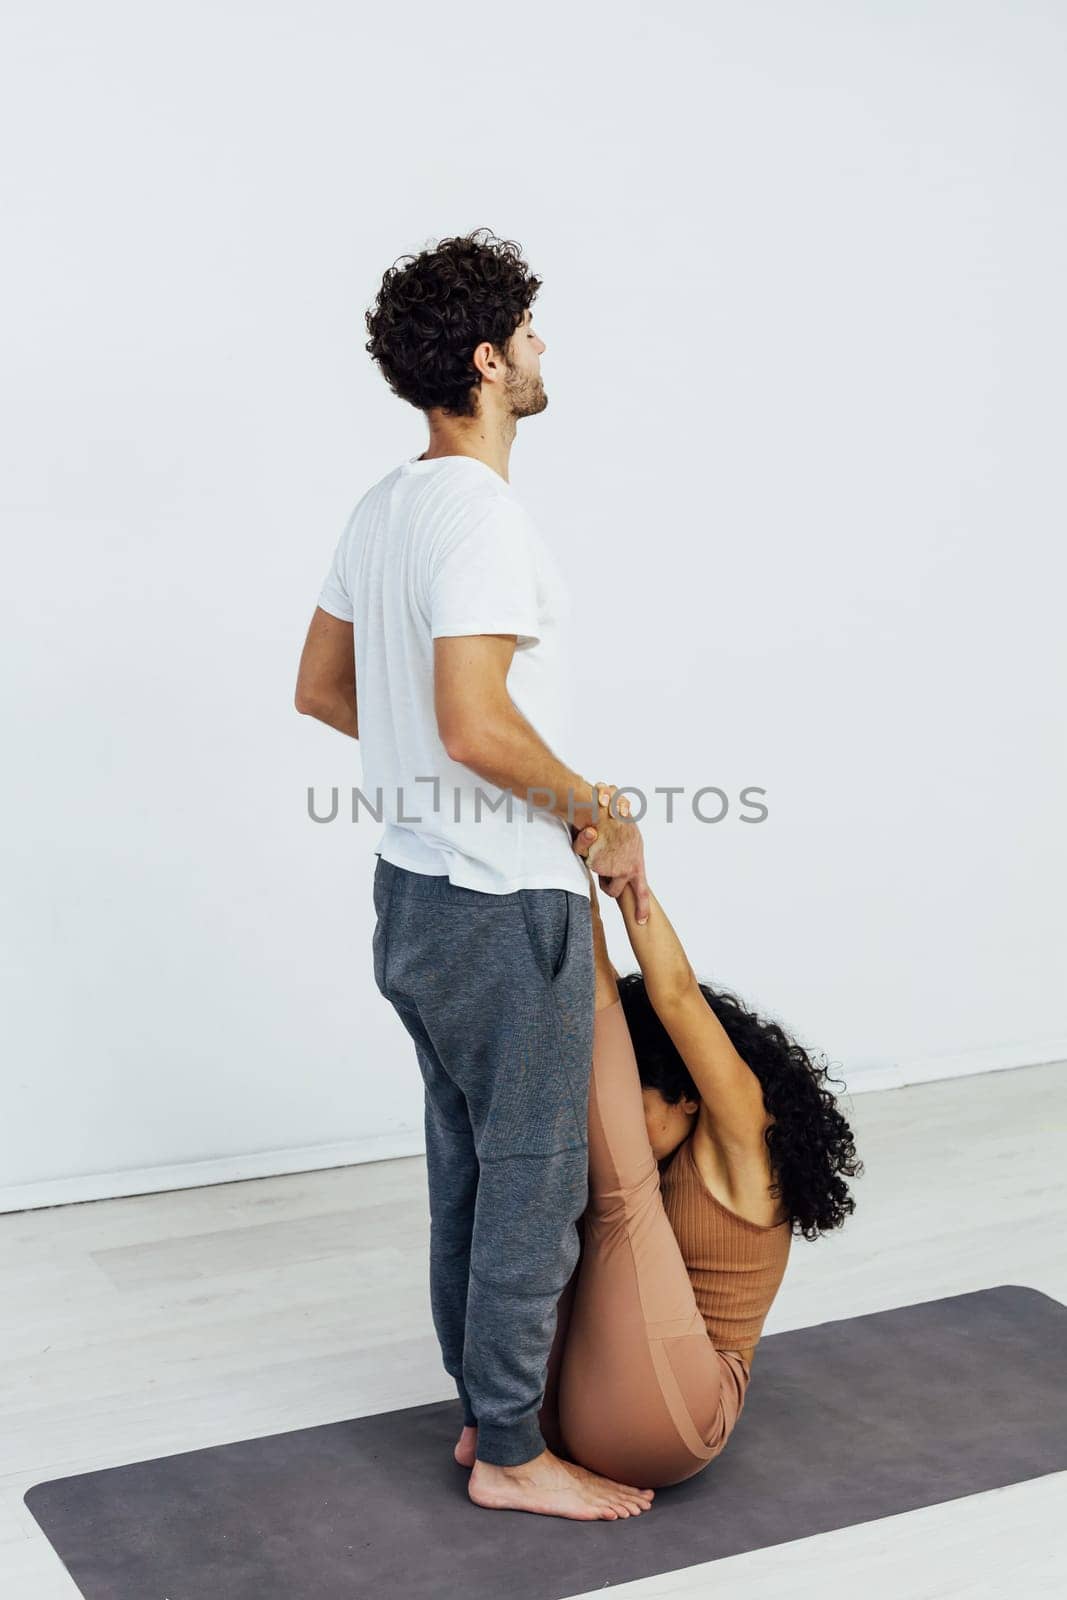 a man and woman do gymnastics warm-up yoga asana posture exercises